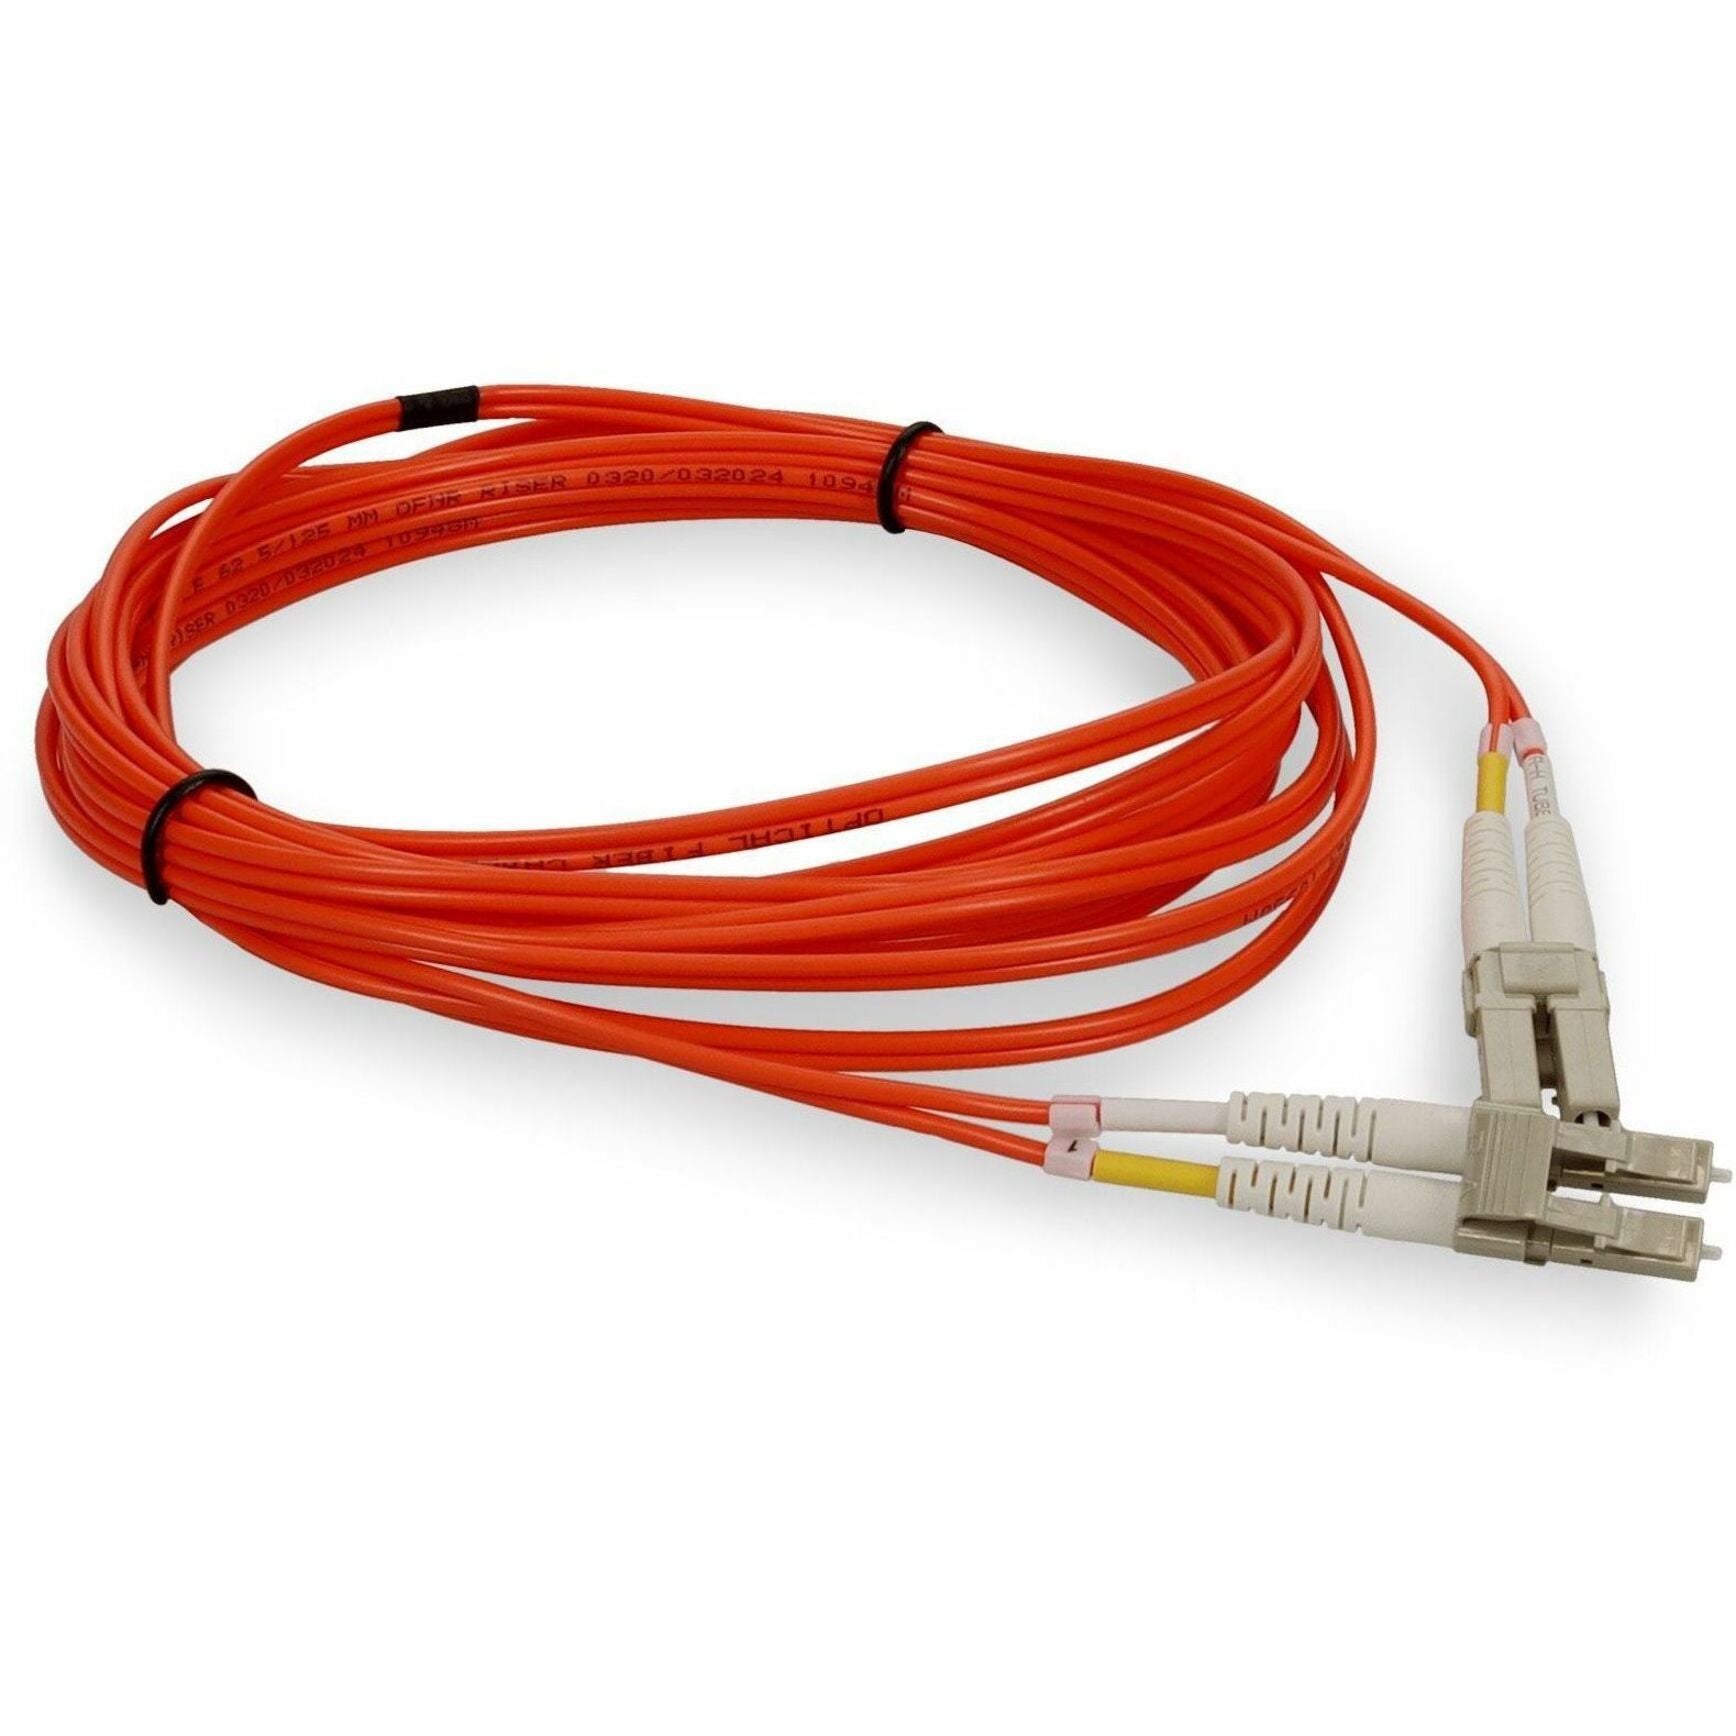 添加 ADD-LC-LC-10M6MMF 10m 多模光纤（MMF）双绞线 LC/LC OM1 橙色补丁电缆，3年保修。品牌名称：AddOn。将这些属性值中的每个可翻译词语翻译为中文（普通话）。翻译品牌名称。